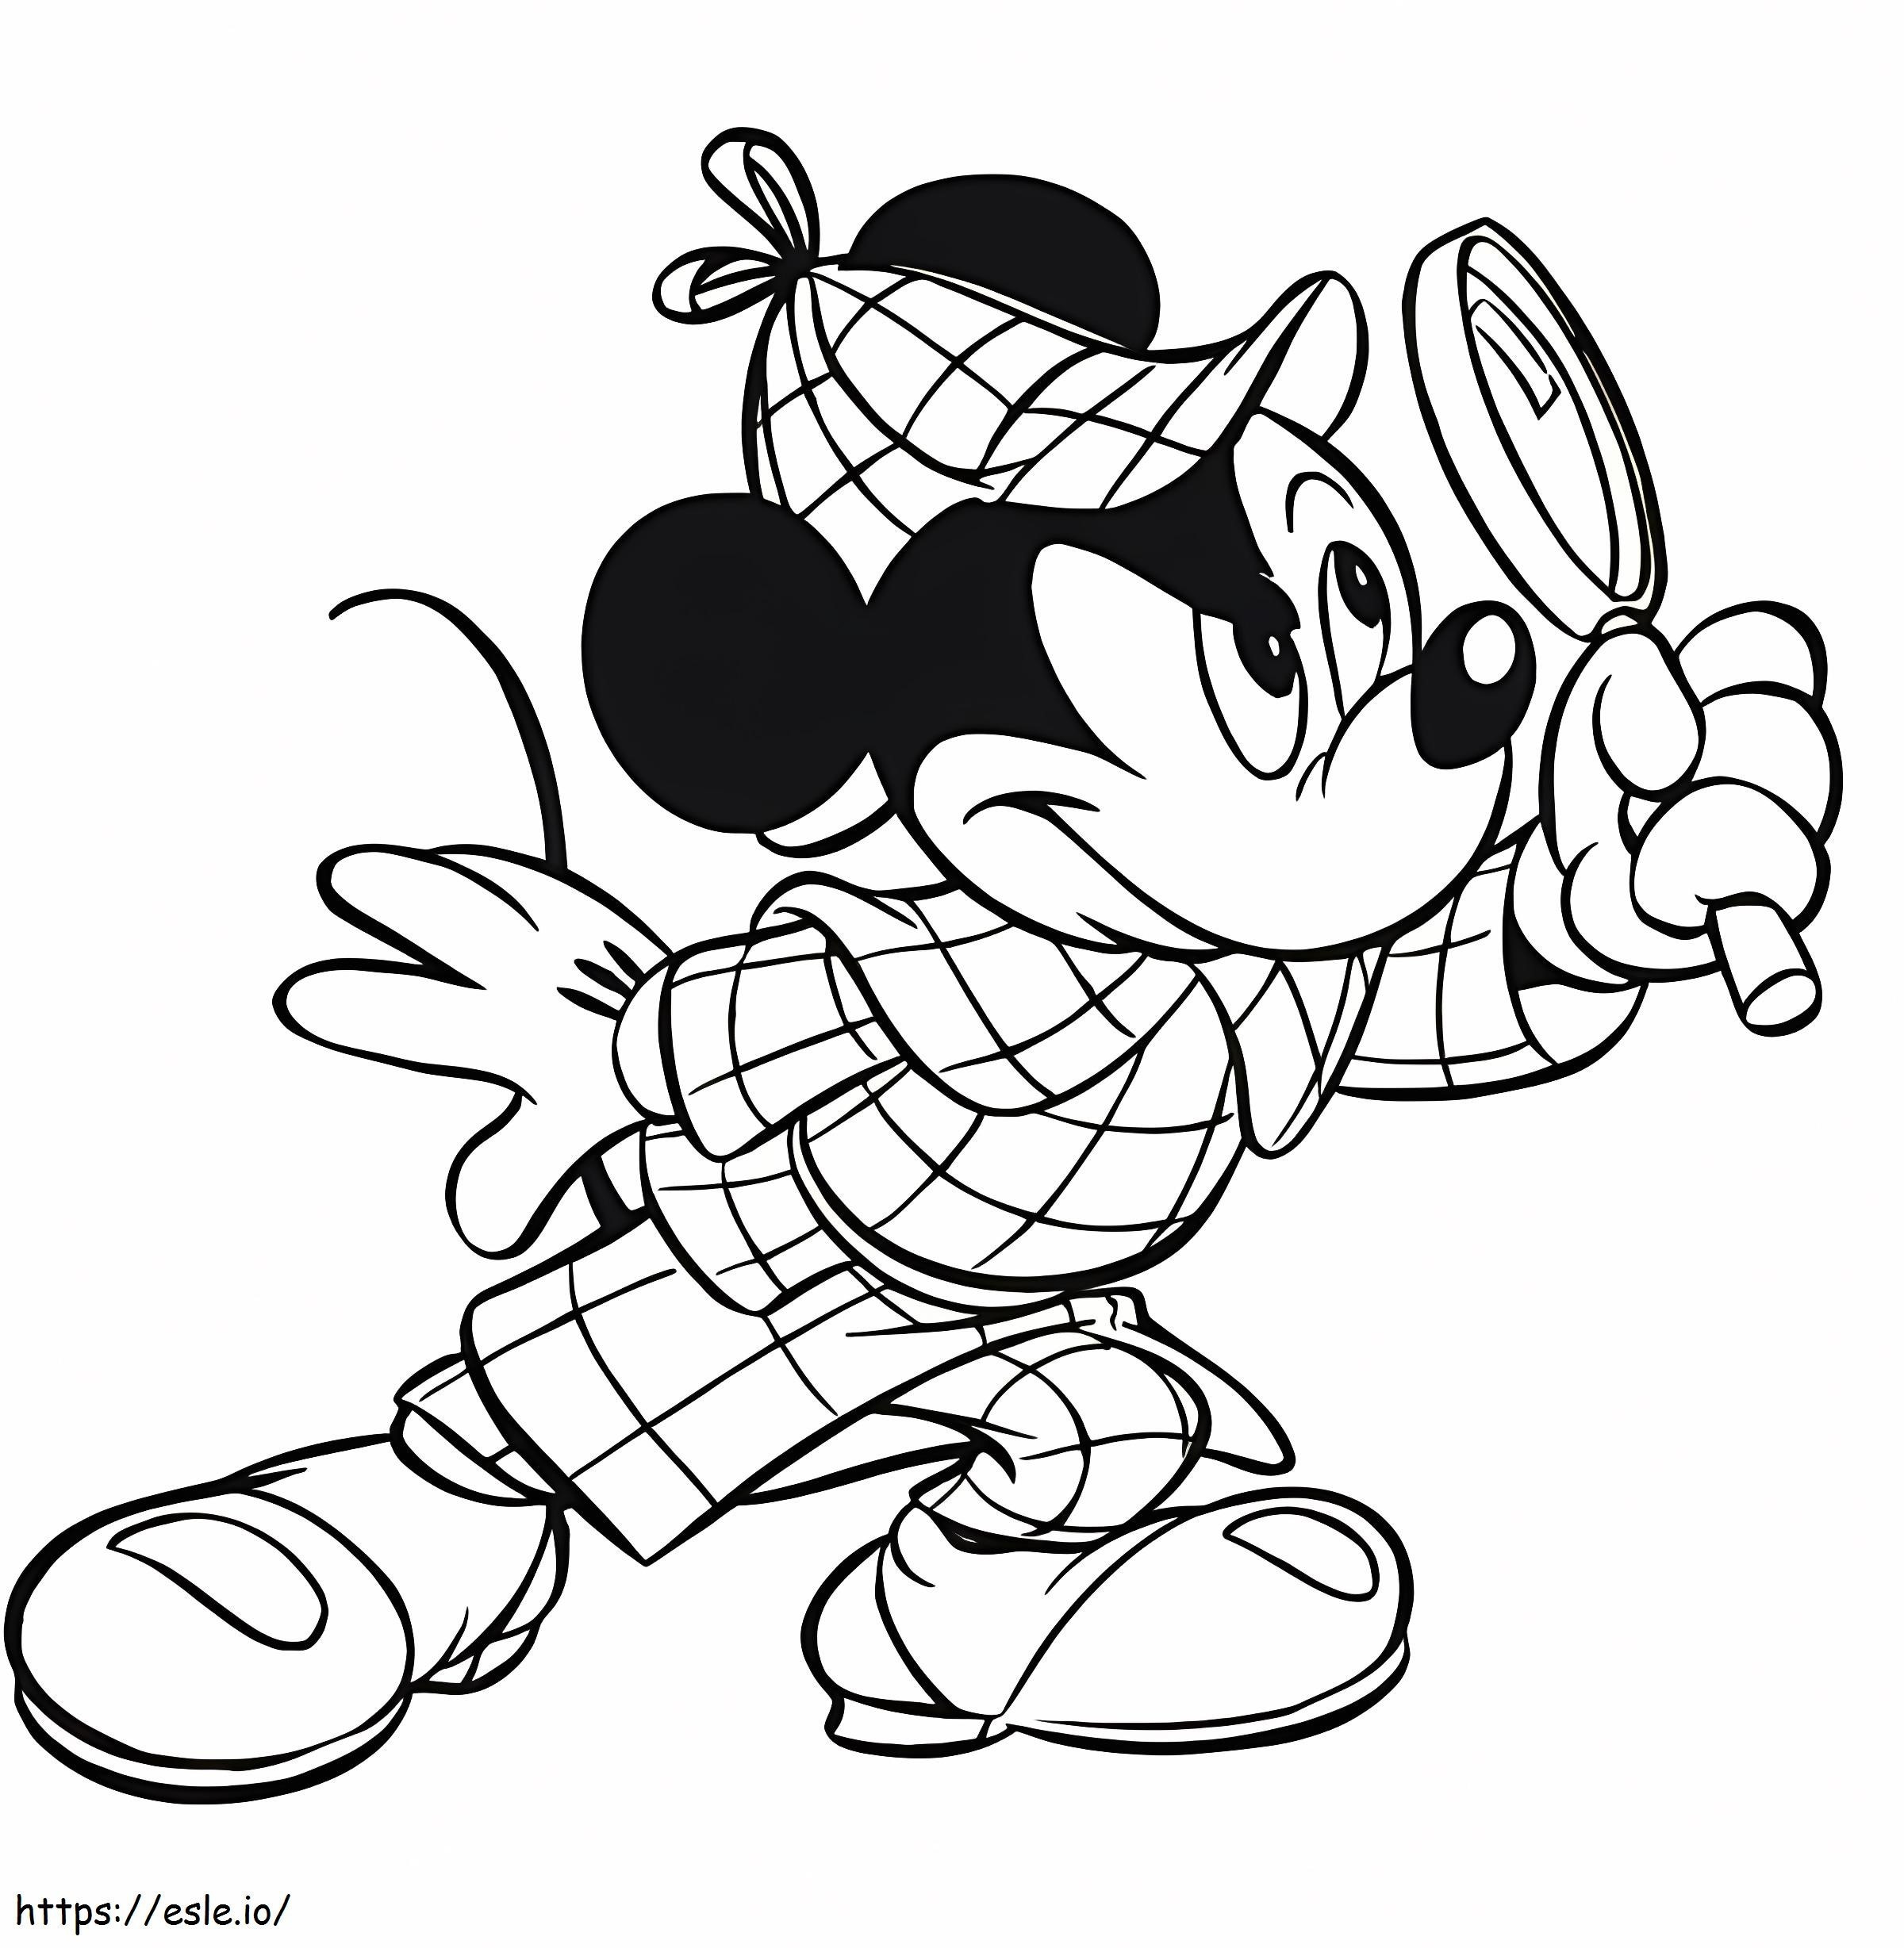 Mickey Mouse Le Detective ausmalbilder